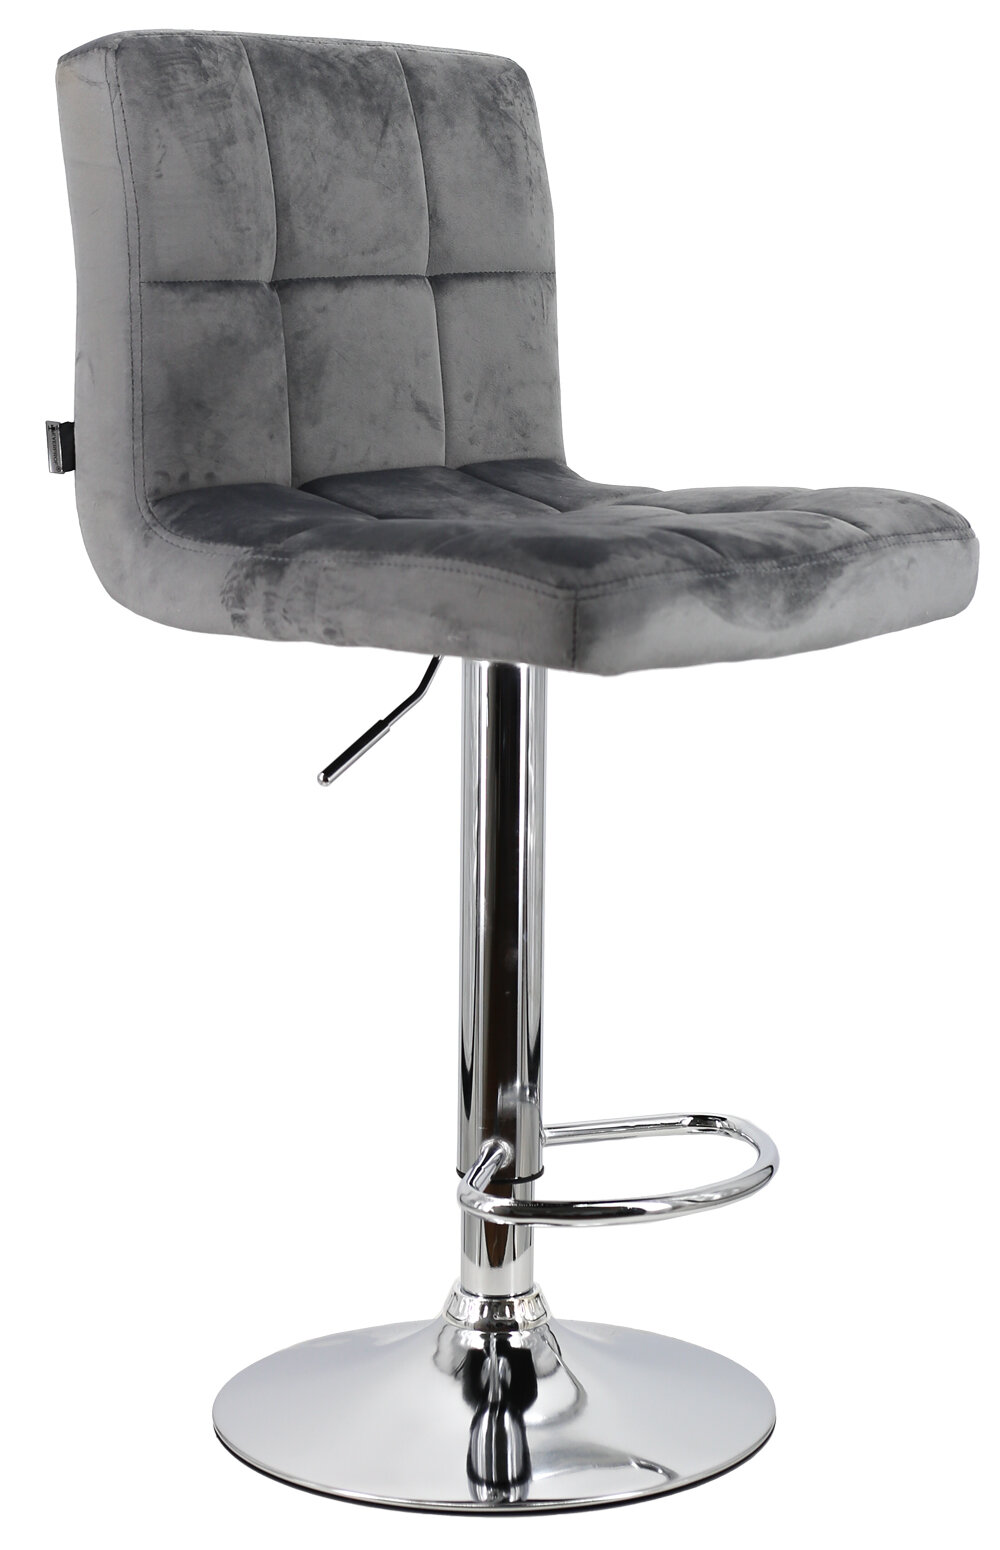 Кресло Everprof Барный стул Everprof Asti Ткань Серый